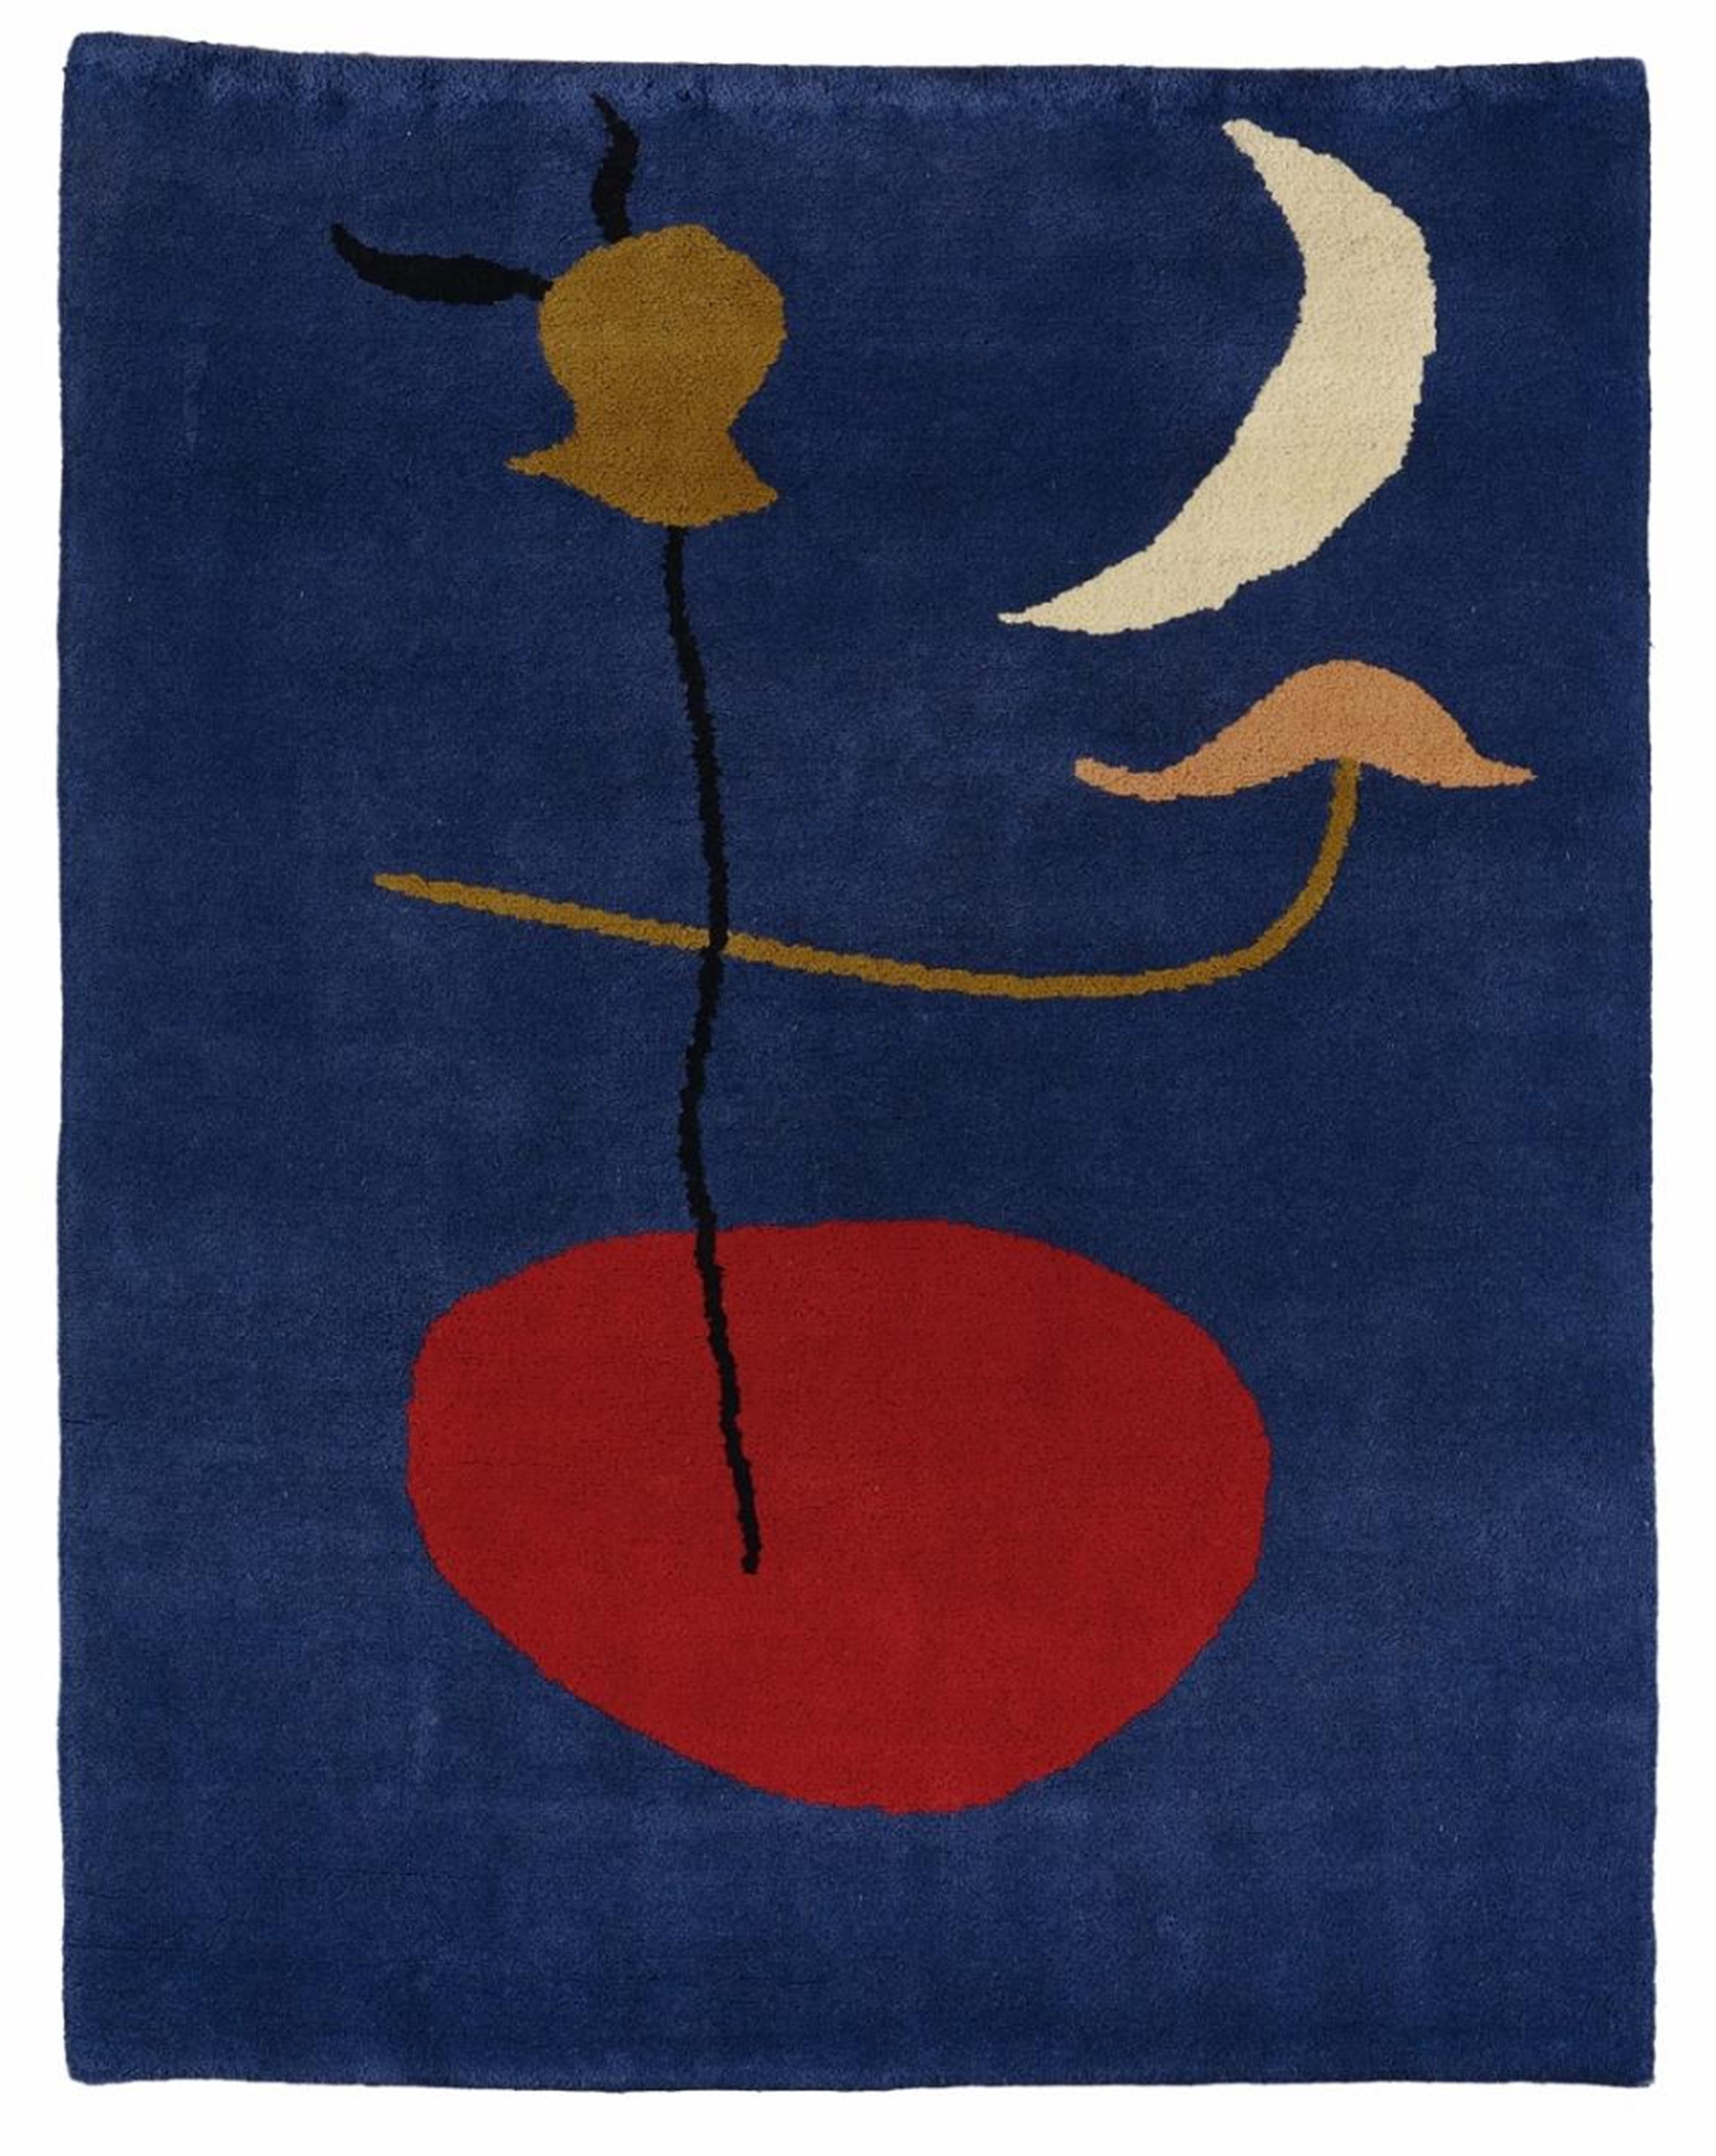 Nach Joan Miró - Danseuse espagnole - image-1